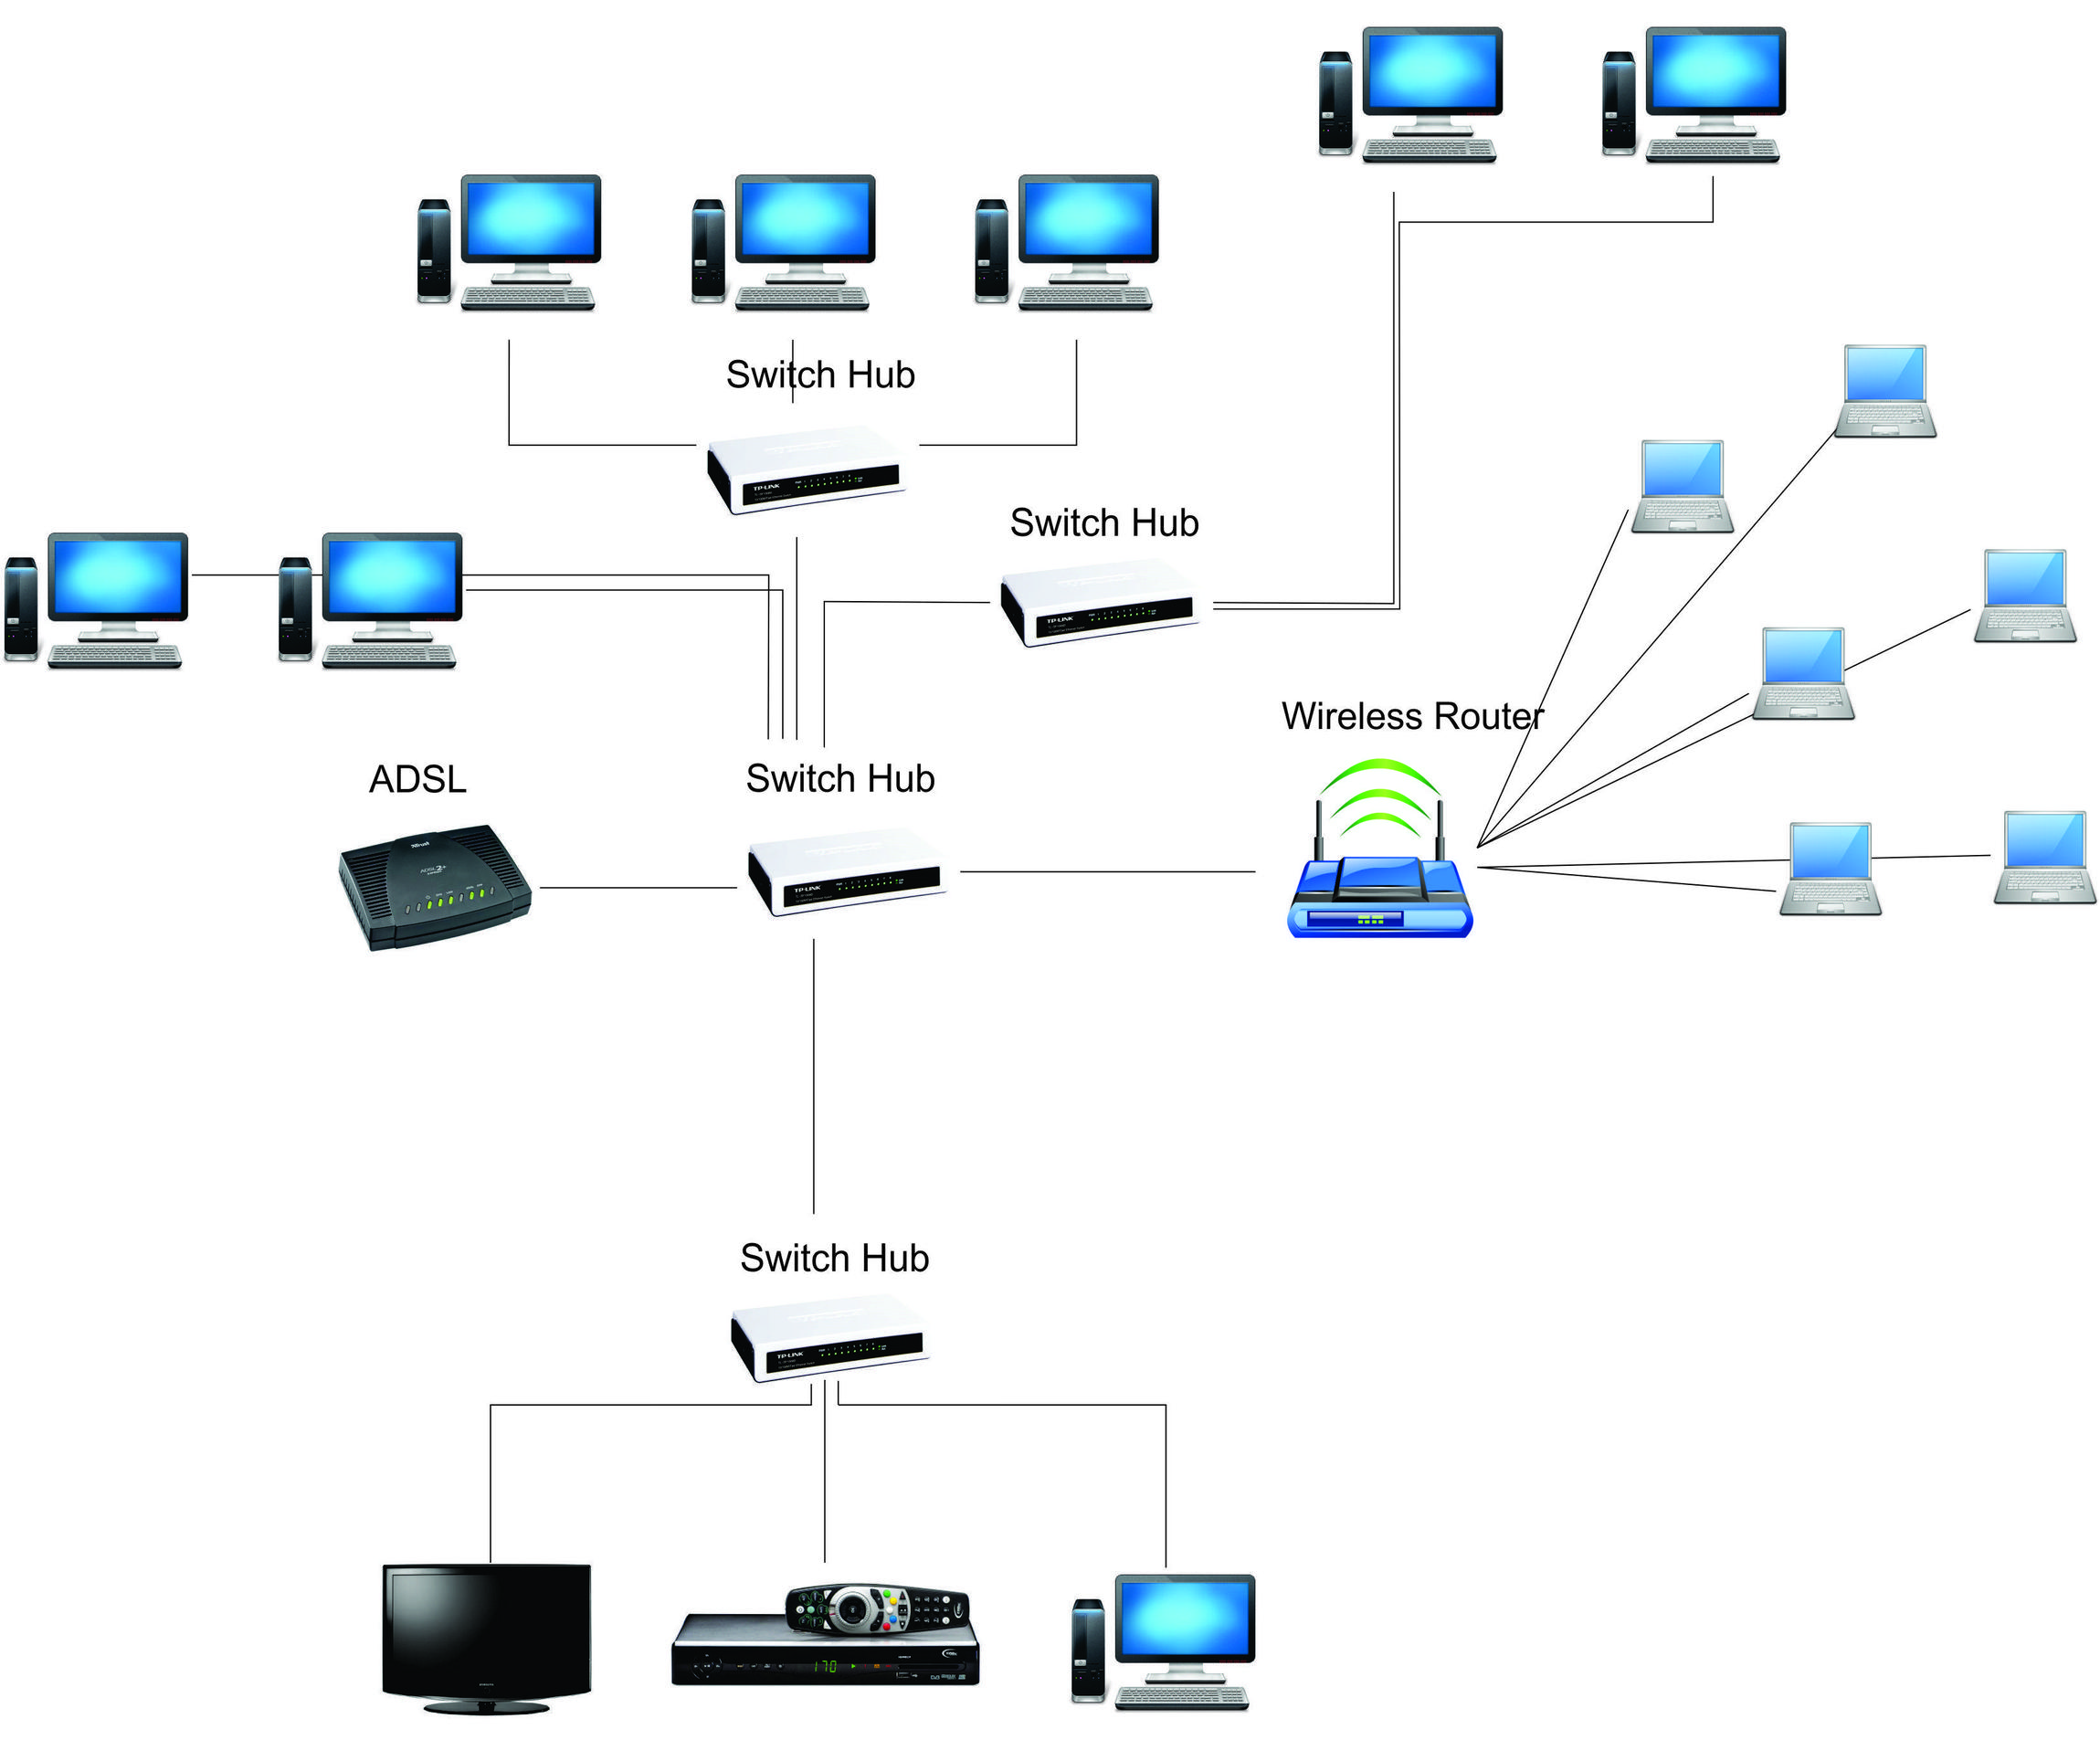 ask-tipologi-jaringan-di-rumah---setingan-wireless-router-prolink-prn3001